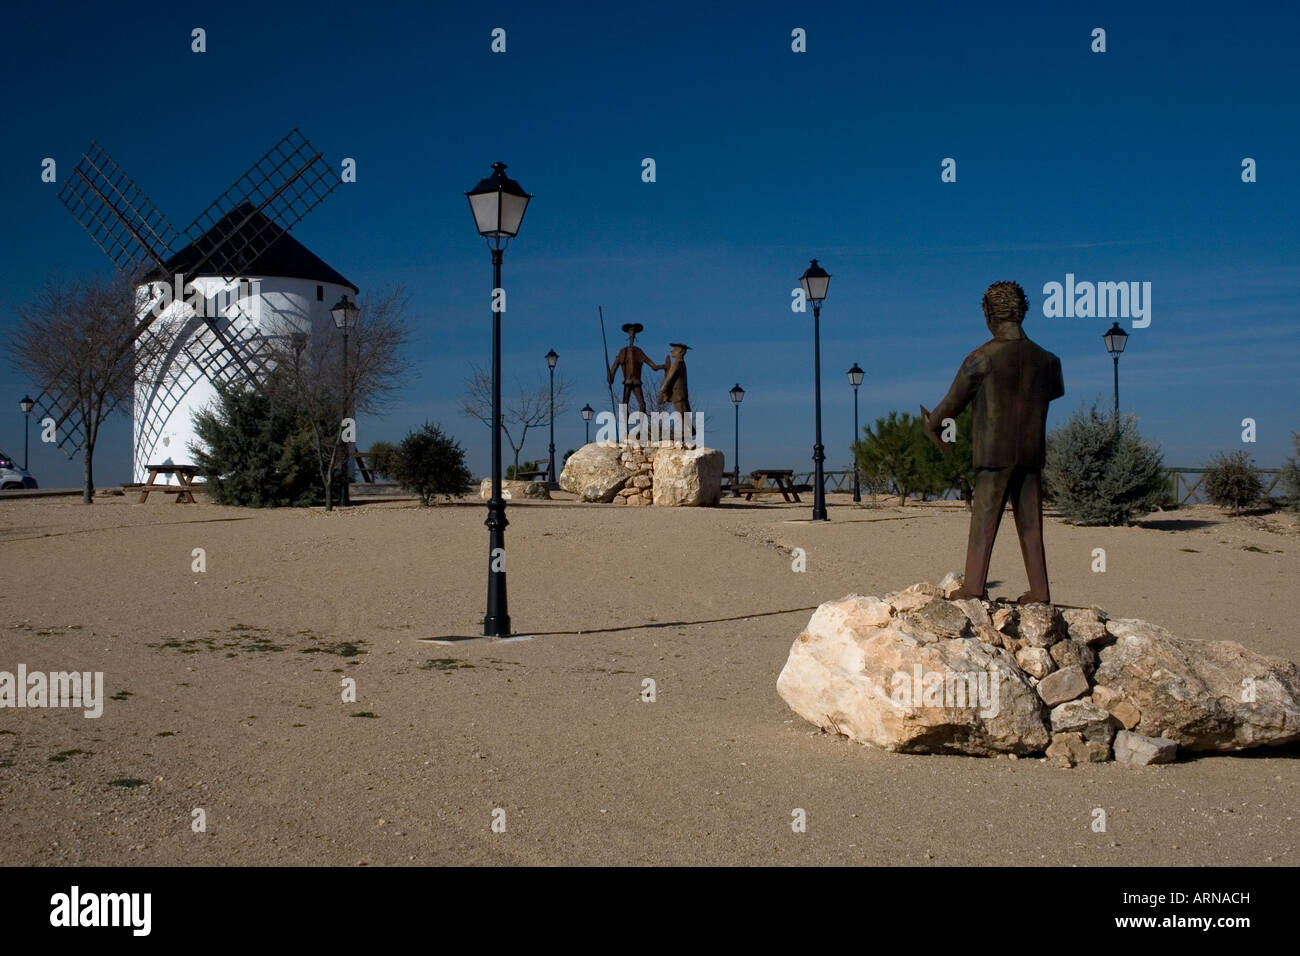 Al Parque de Molino Don Quijote country Barrax La Mancha Spain Stock Photo